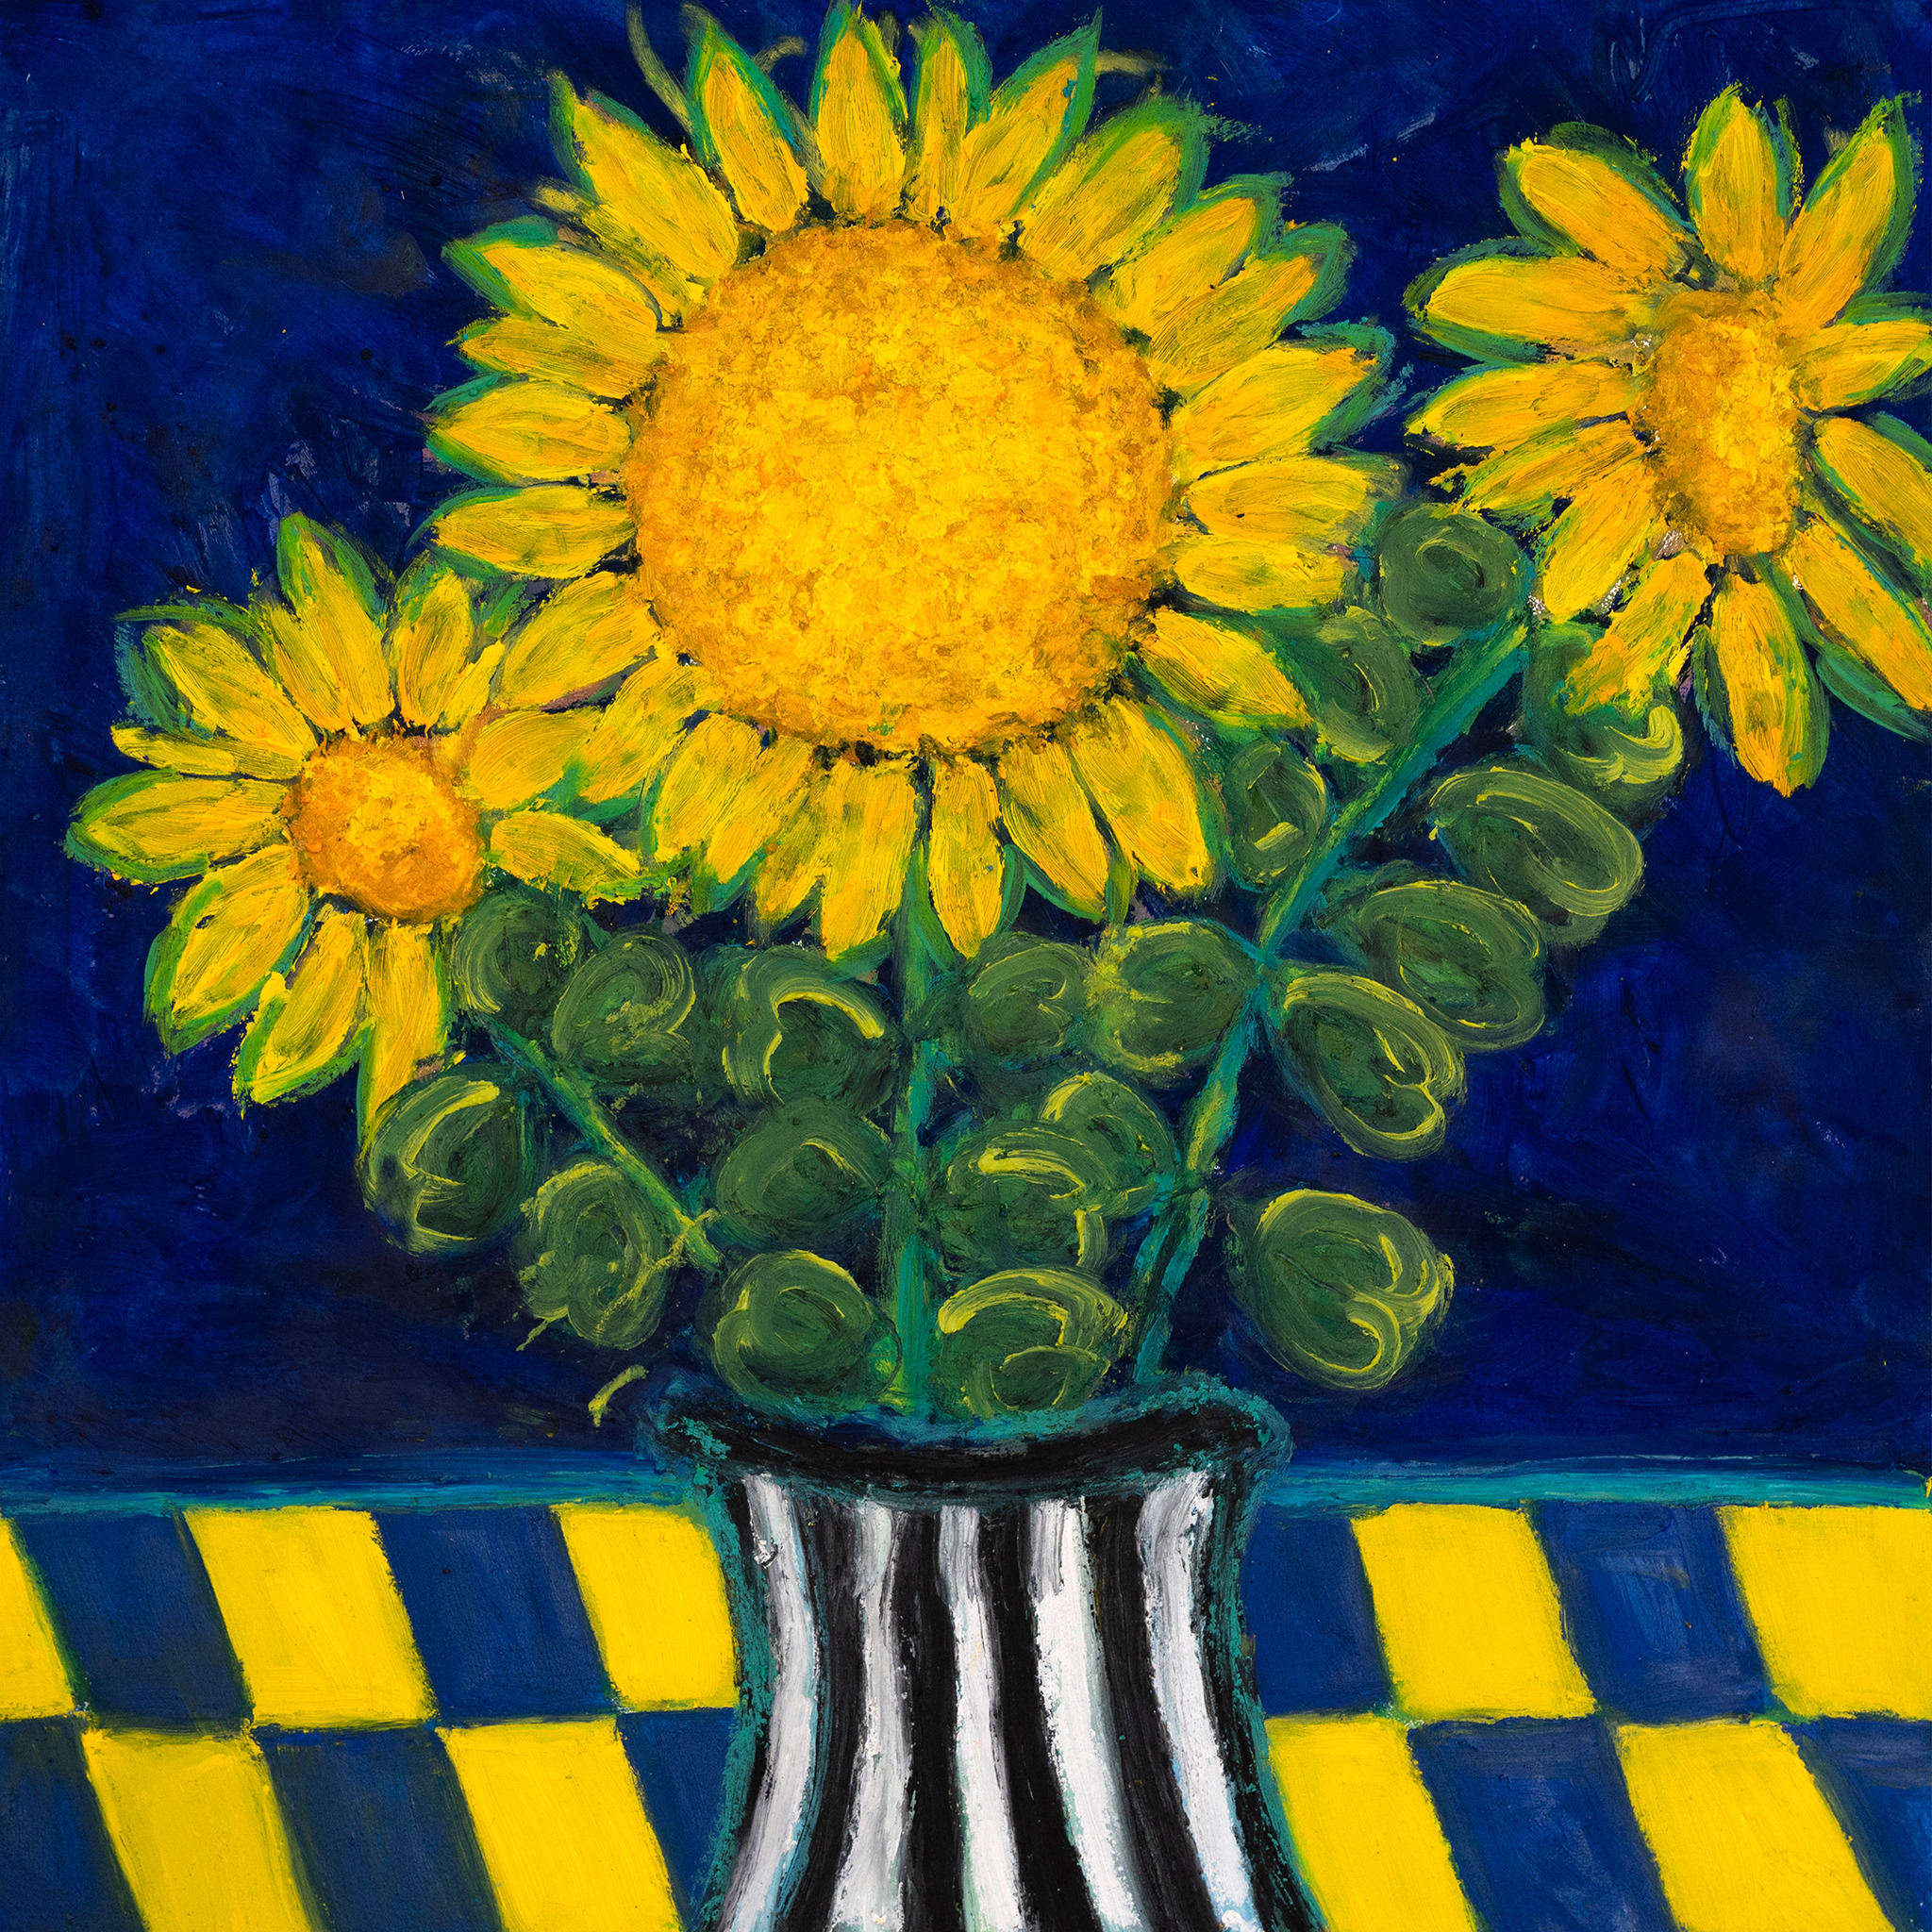 Sunflowers in a vase sq dsc0024 iaekg9